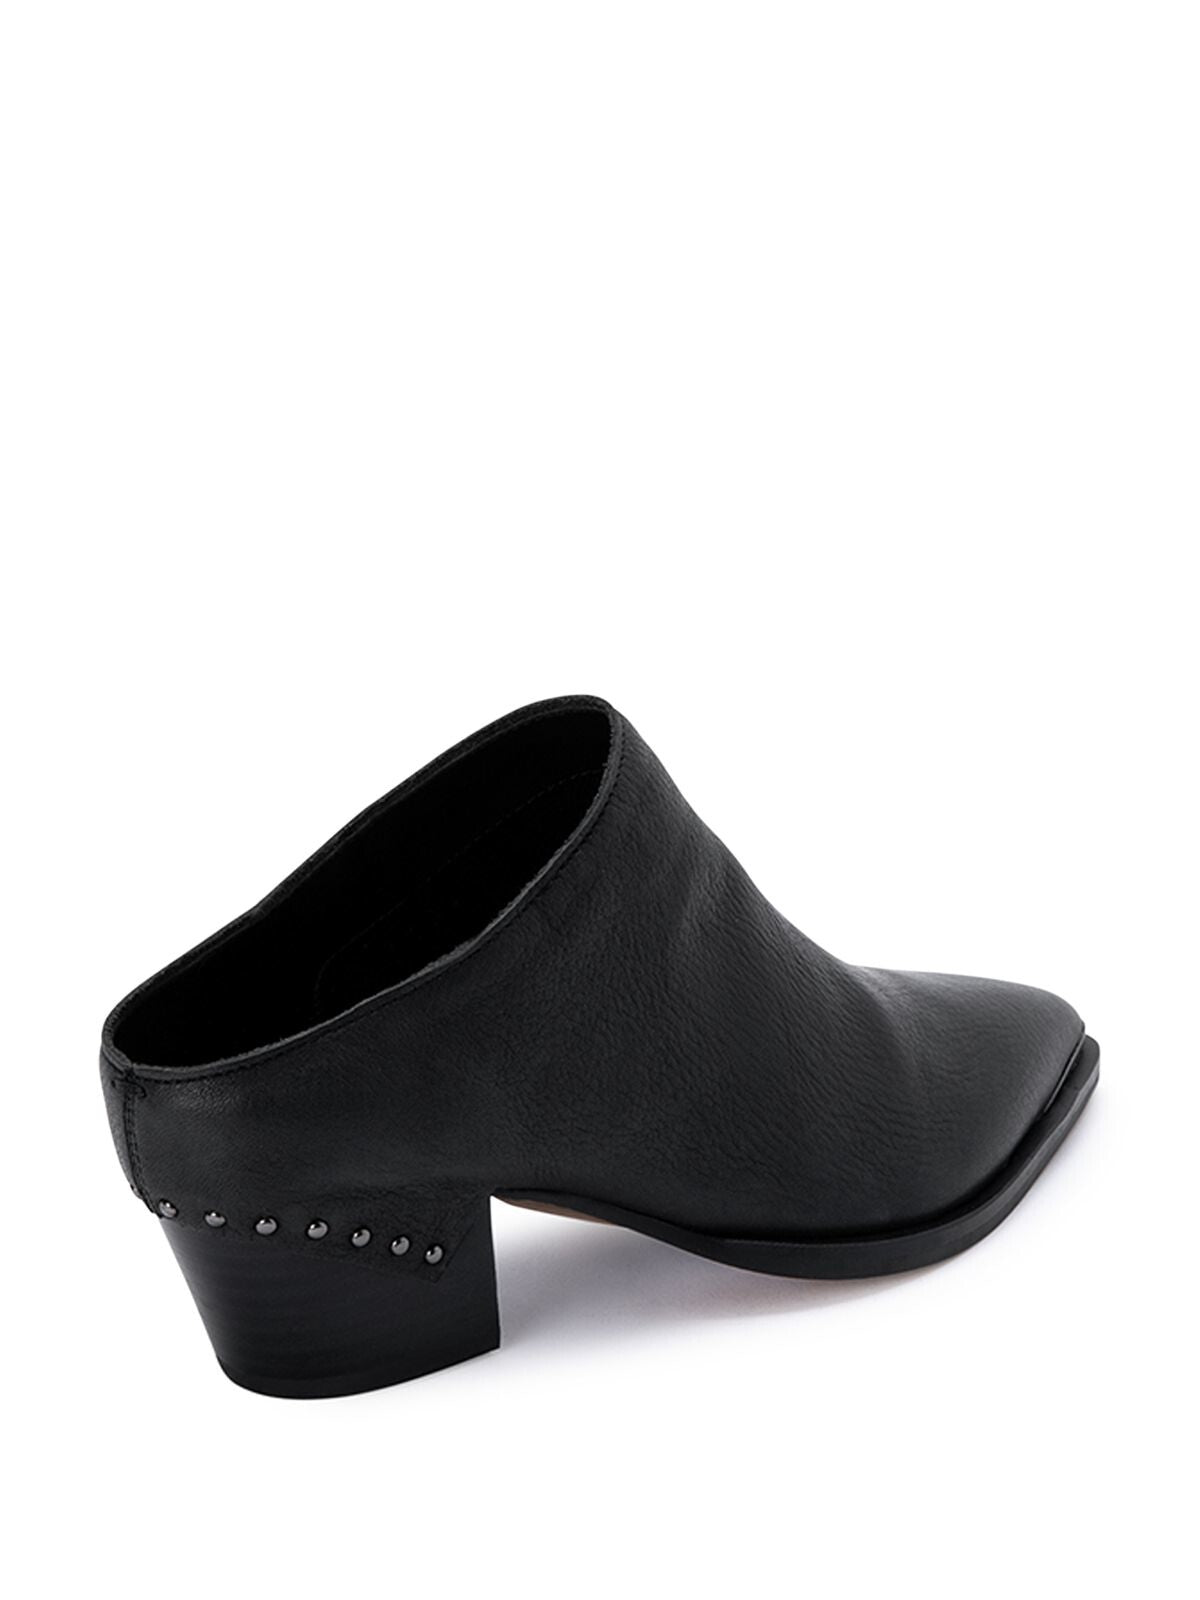 DOLCE VITA Womens Black Studded Comfort Sukie Square Toe Block Heel Slip On Leather Heeled Mules Shoes 7.5